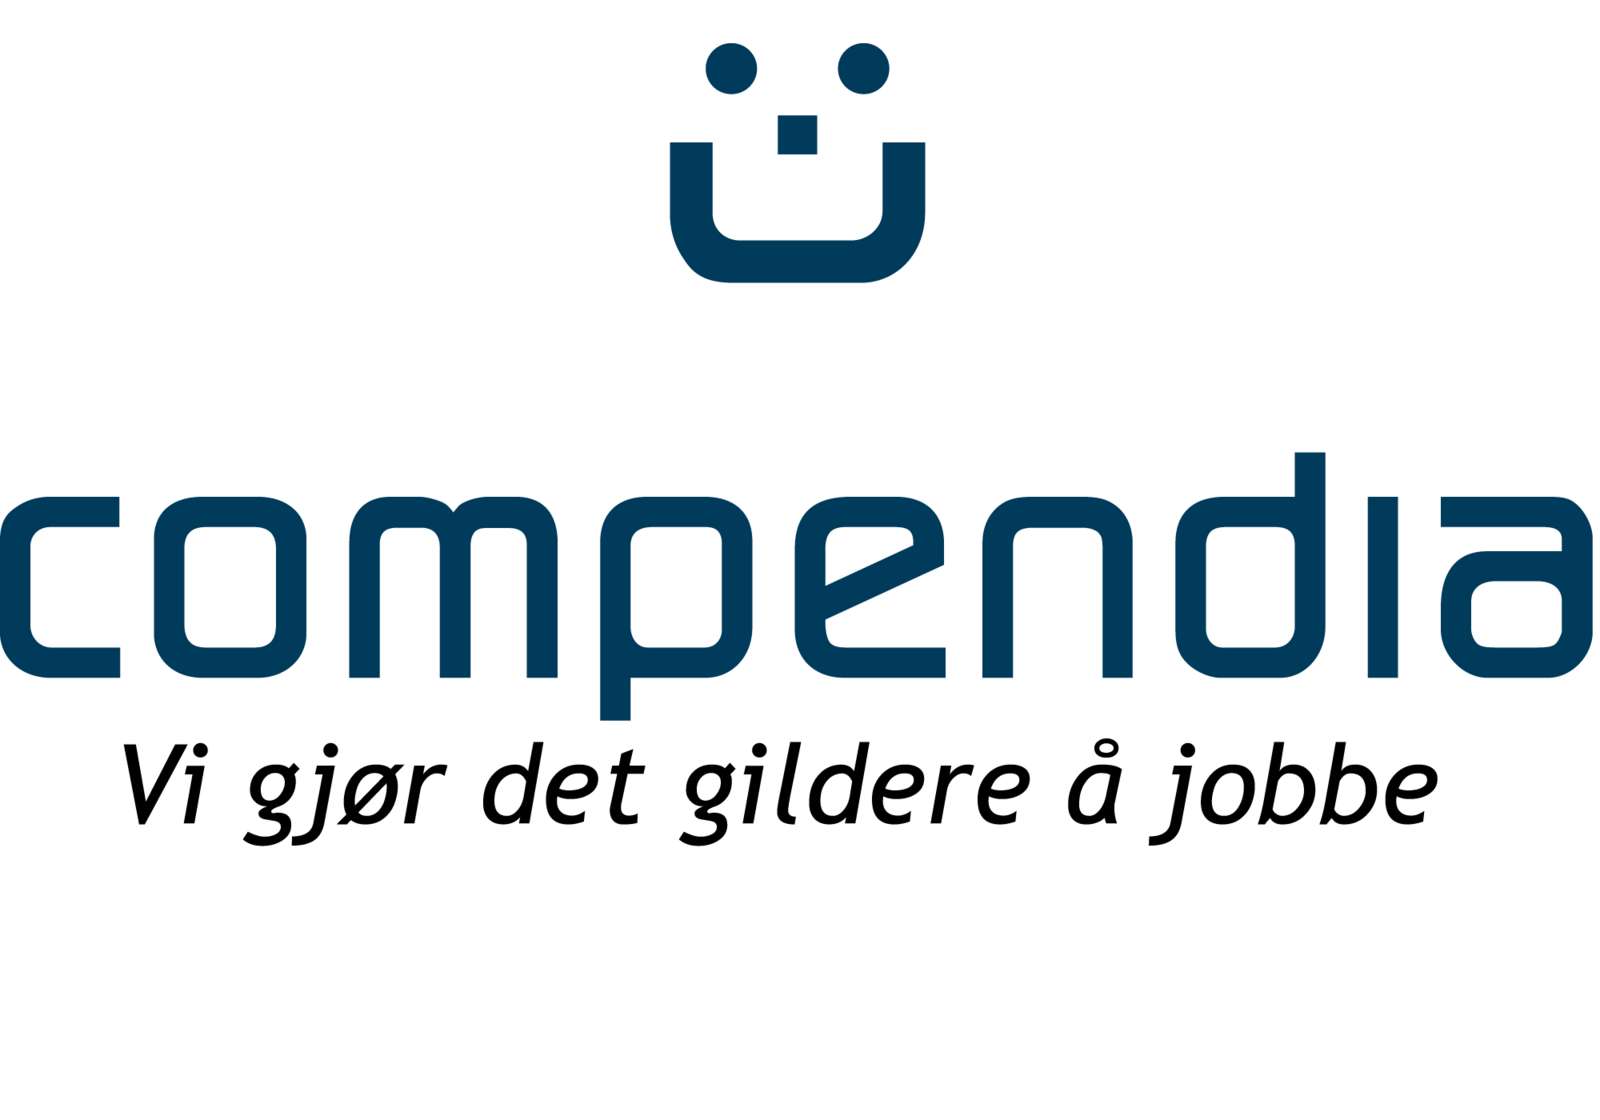 Logo med smiley og slogan